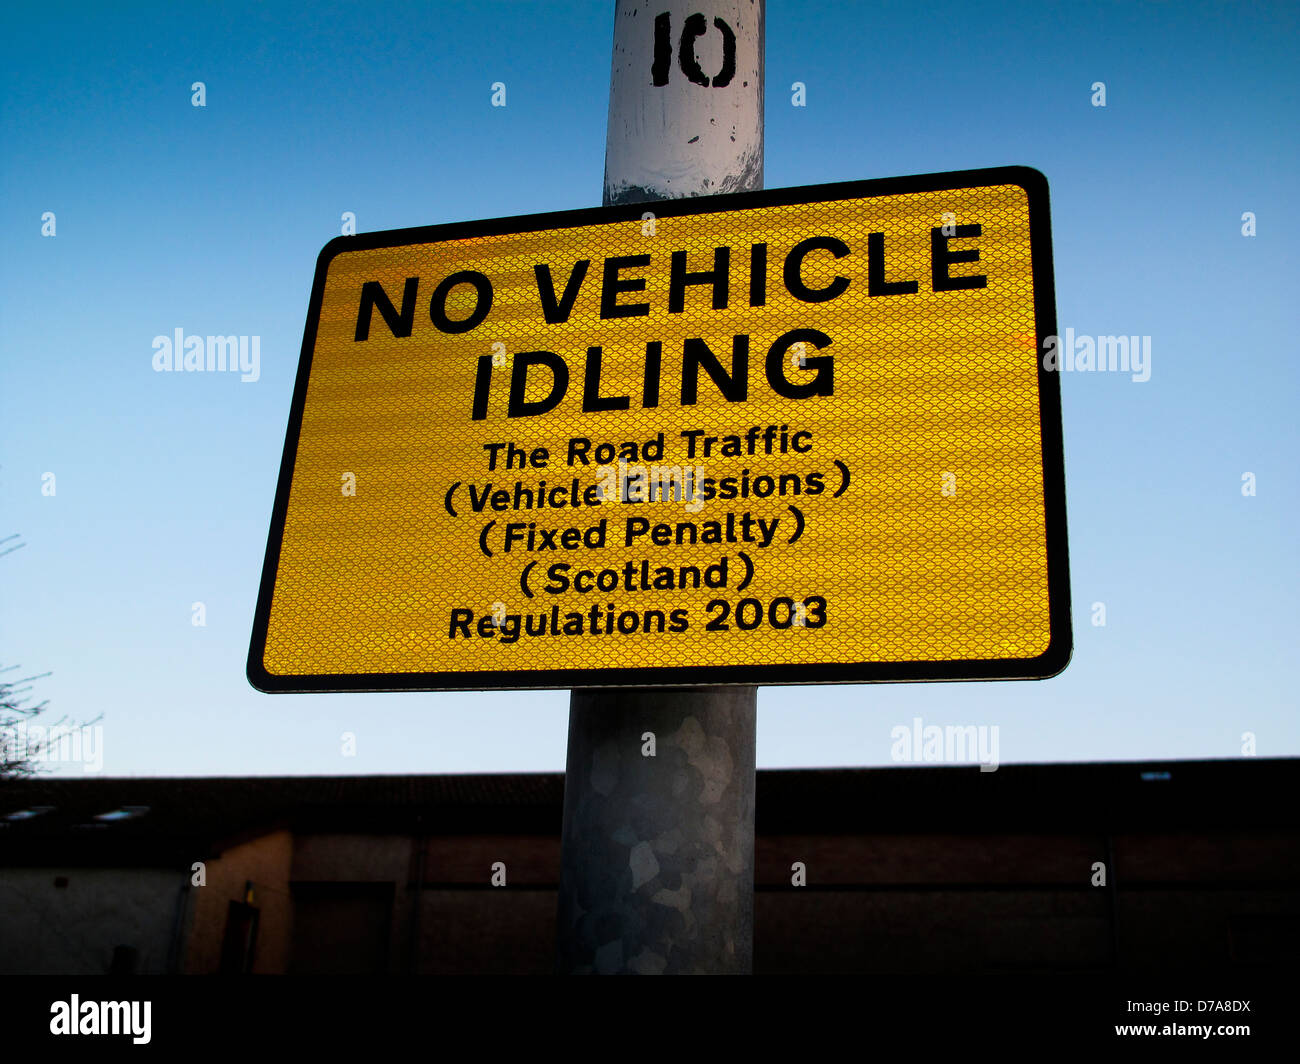 Vehicle emissions regulations warning sign Stock Photo